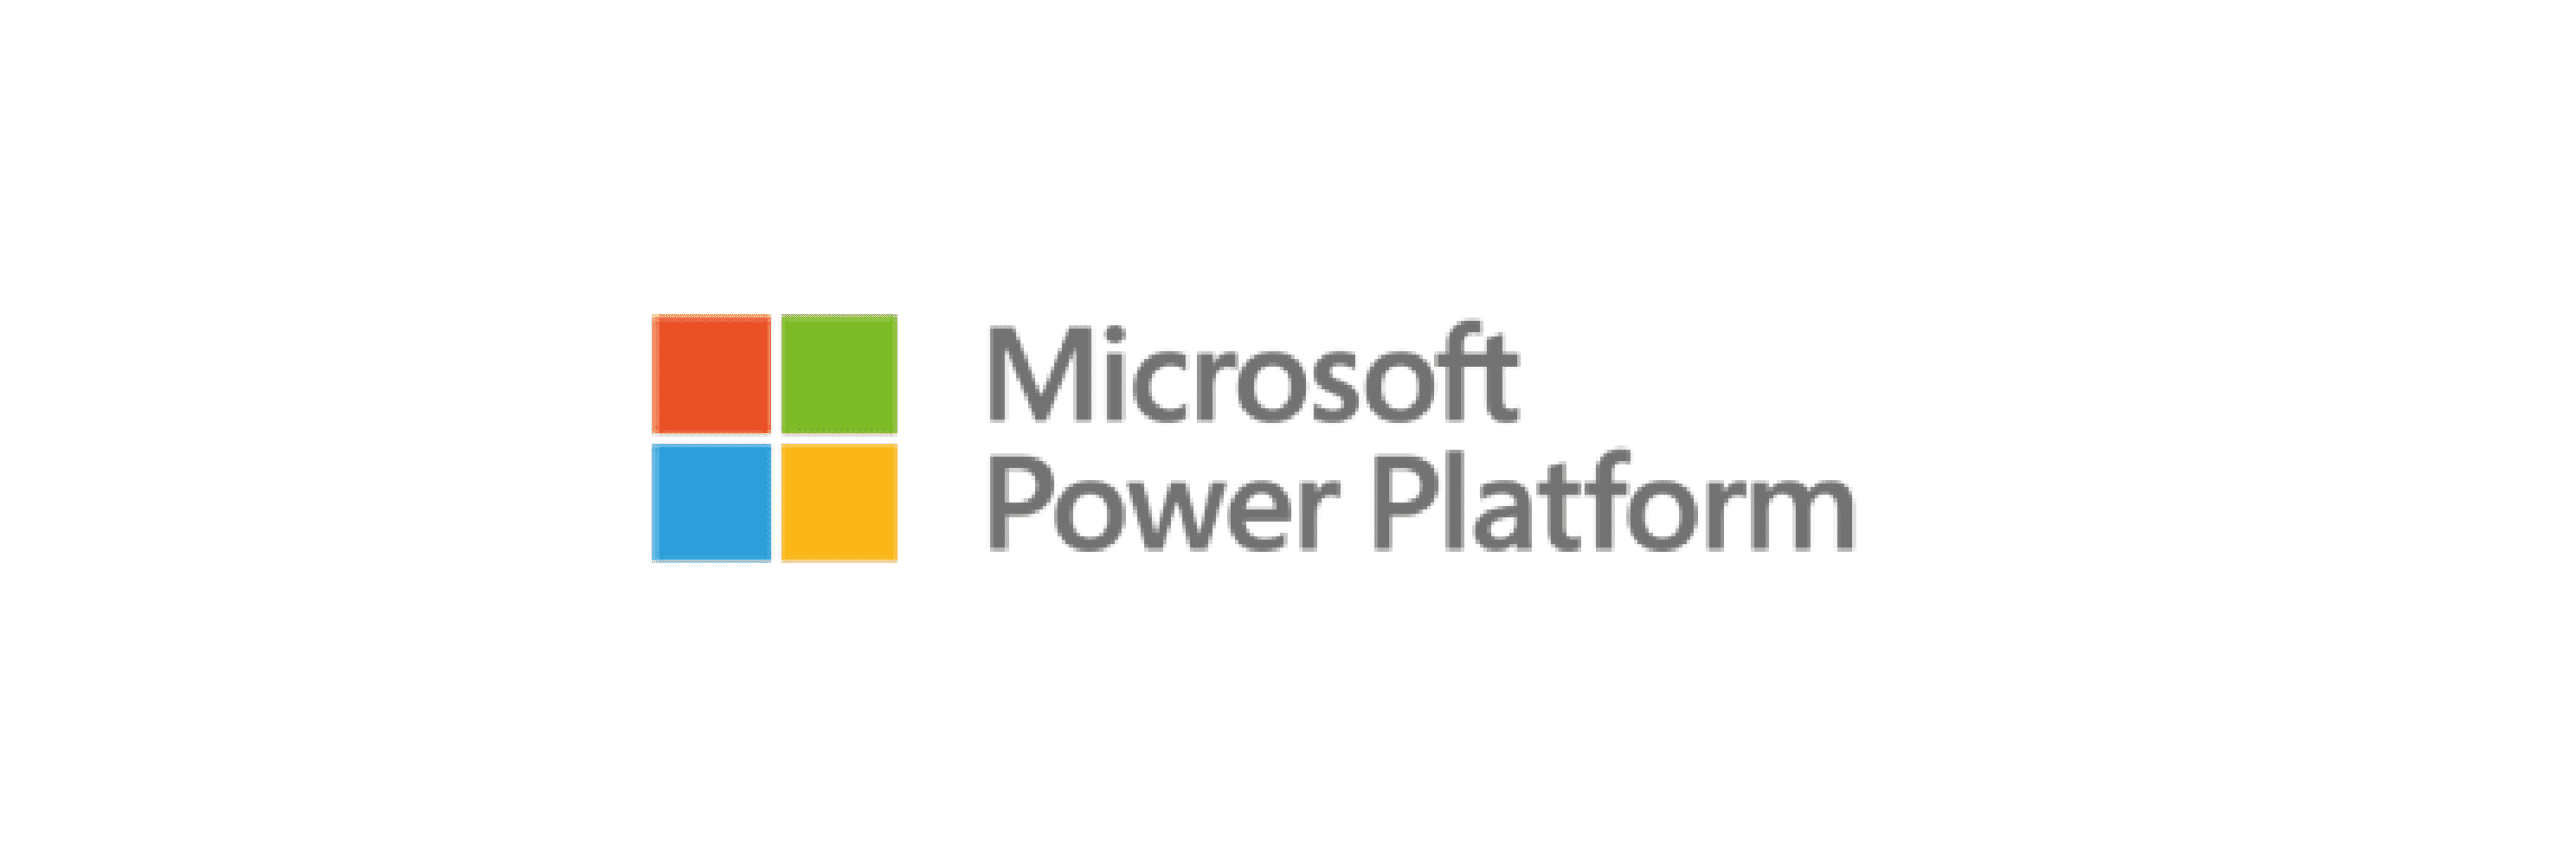 Logo Power Platform